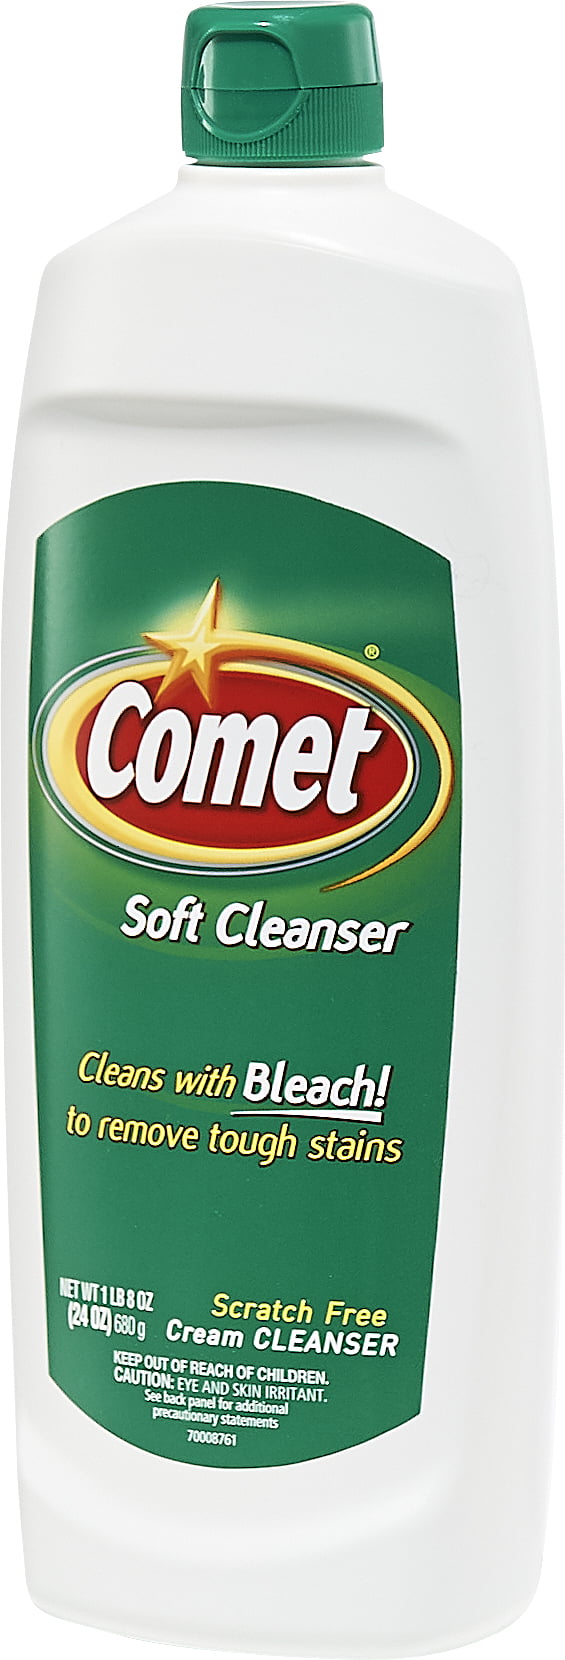 Comet Soft Cleanser With Bleach 24 0 Oz Walmart Com Walmart Com,Canned Tomatoes Italian